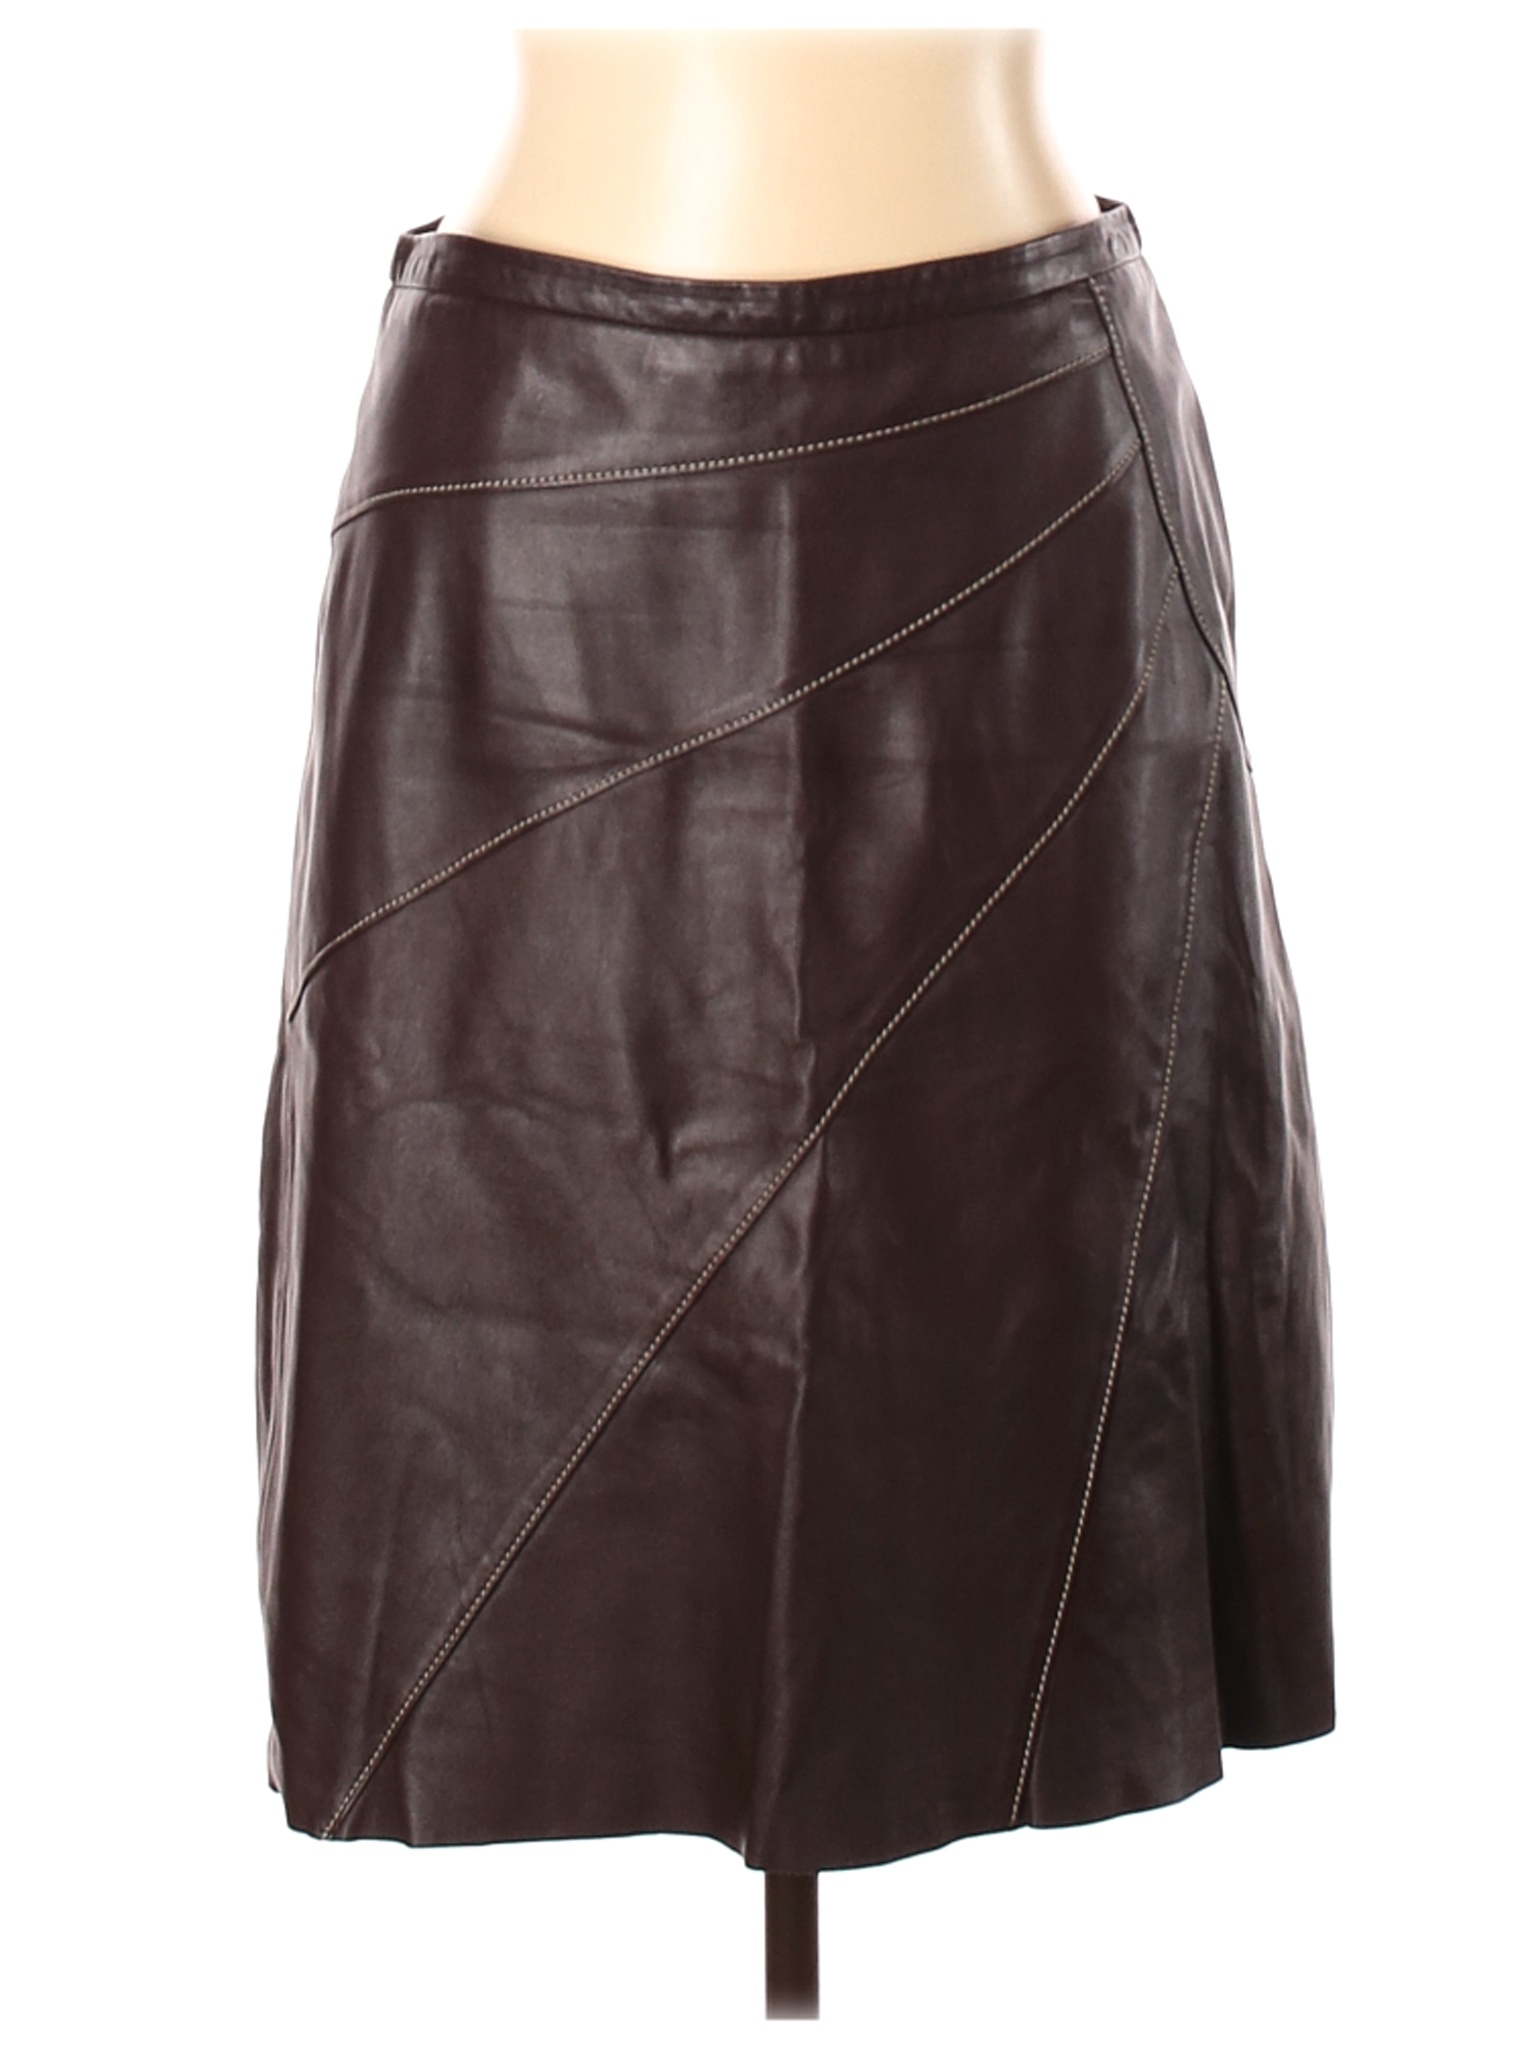 BCBGMAXAZRIA Women Brown Leather Skirt 10 | eBay